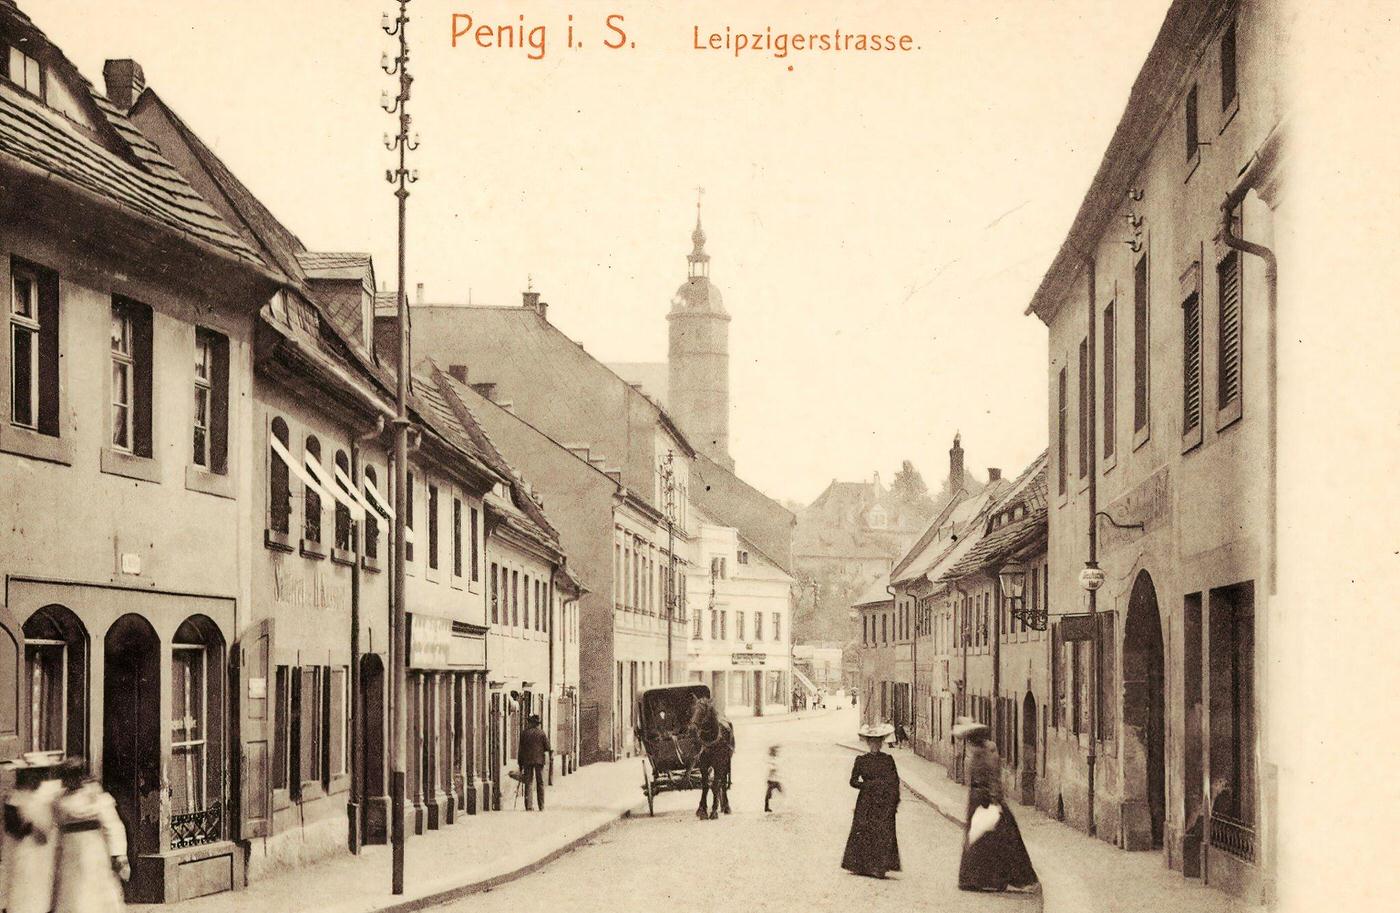 Covered wagons in Penig, Churches, Landkreis Mittelsachsen, Germany, 1903.